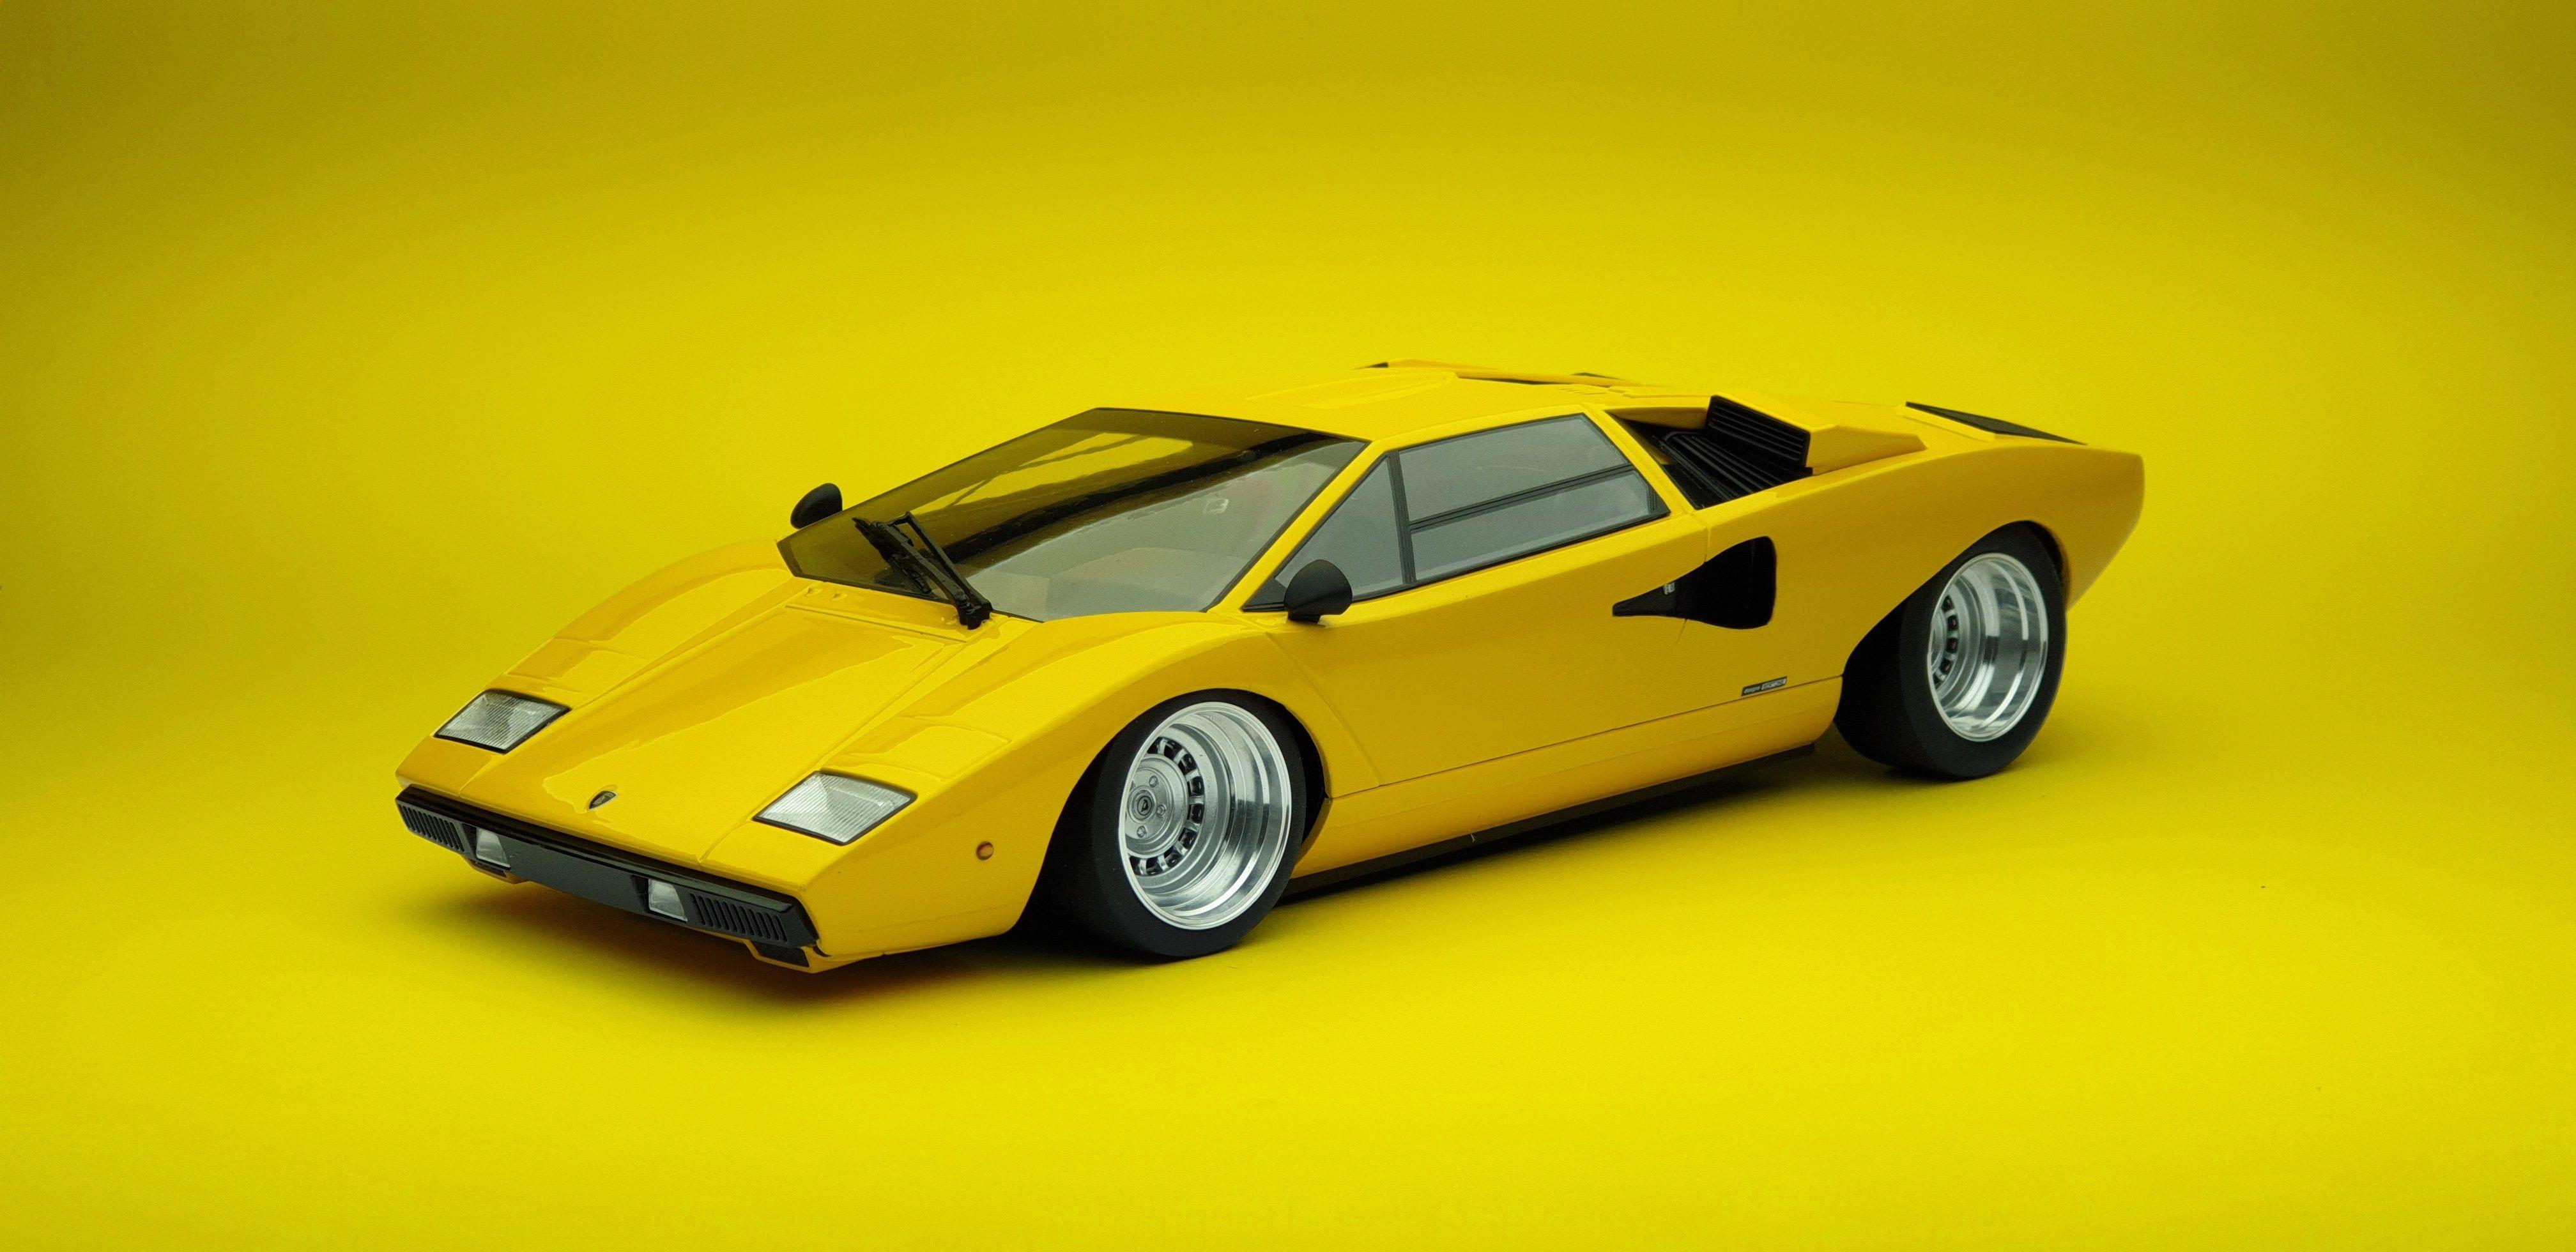 Lamborghini Countach Wallpapers - Top Free Lamborghini ...